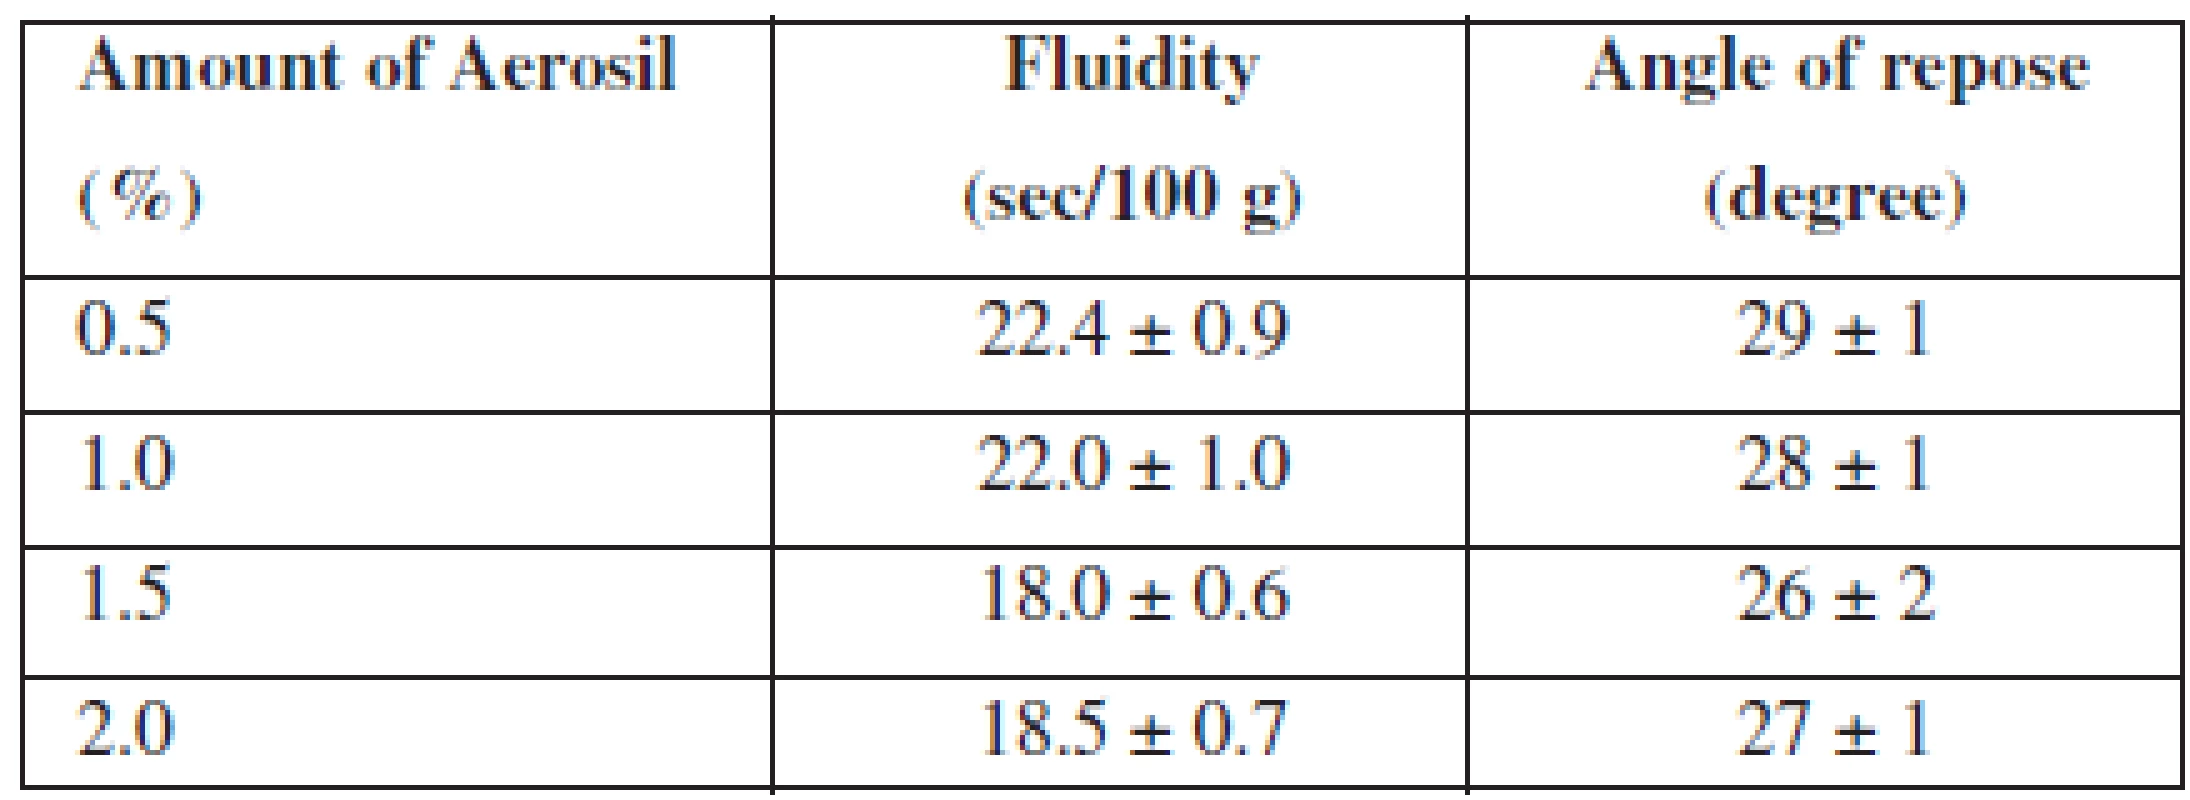 Influence of Aerosil amount on the fluidity of APIs